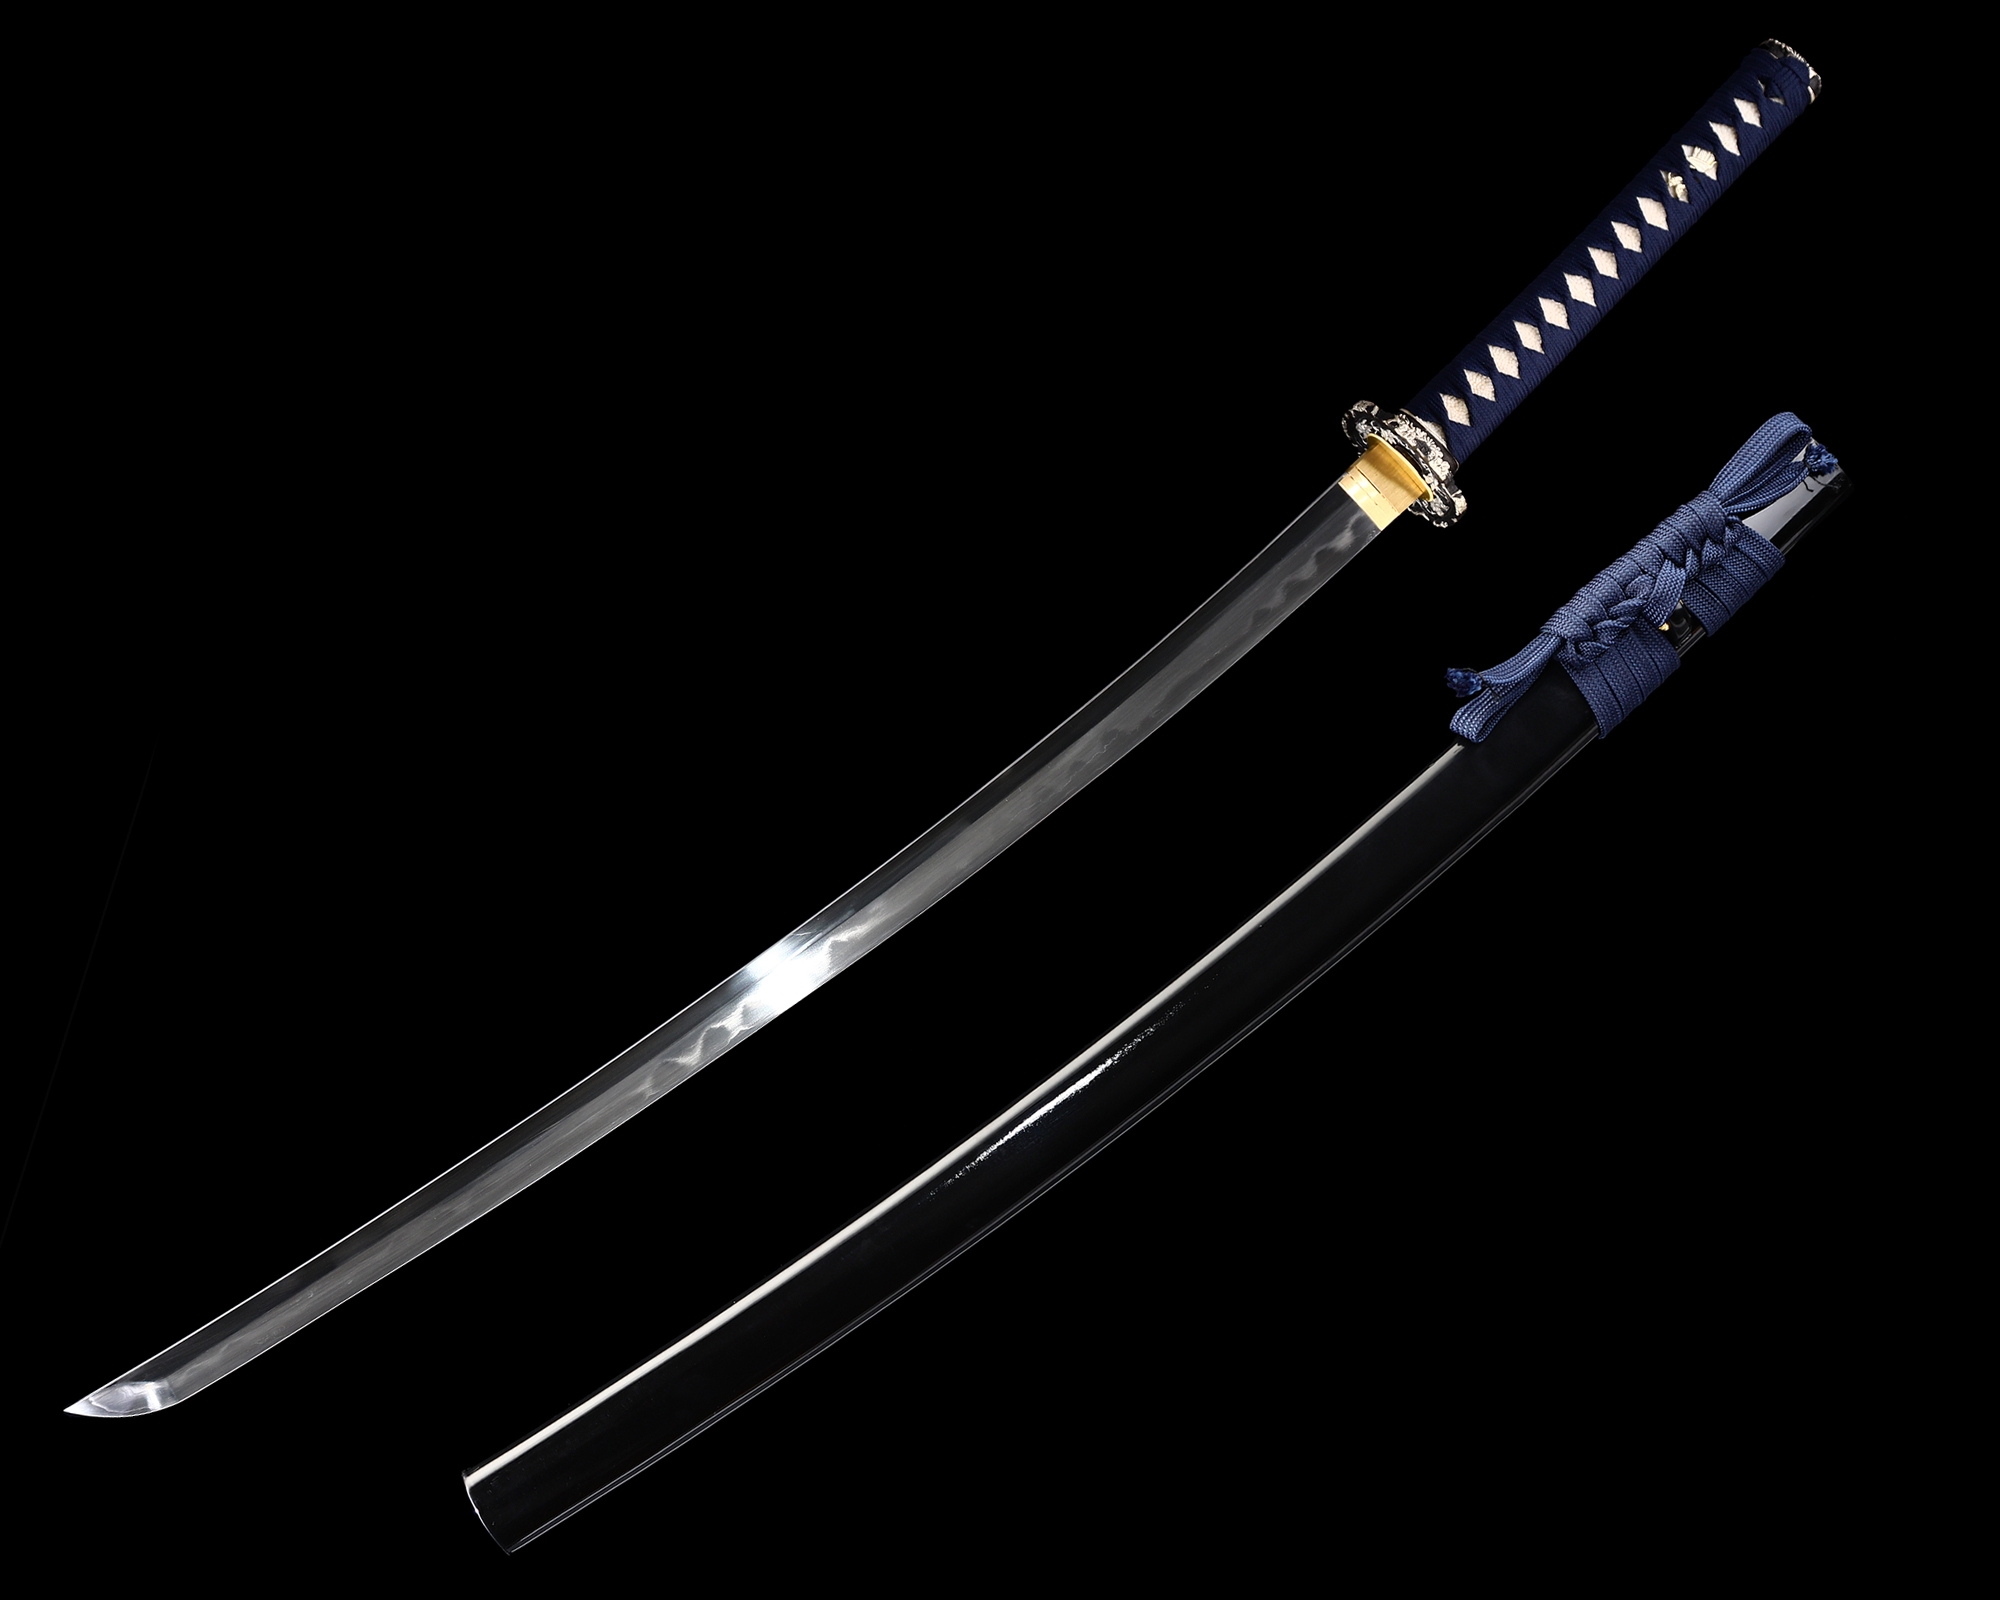 Details about   Hand Forged High Carbon Steel Japanese Samurai Sword Katata Sharp Battle Ready 